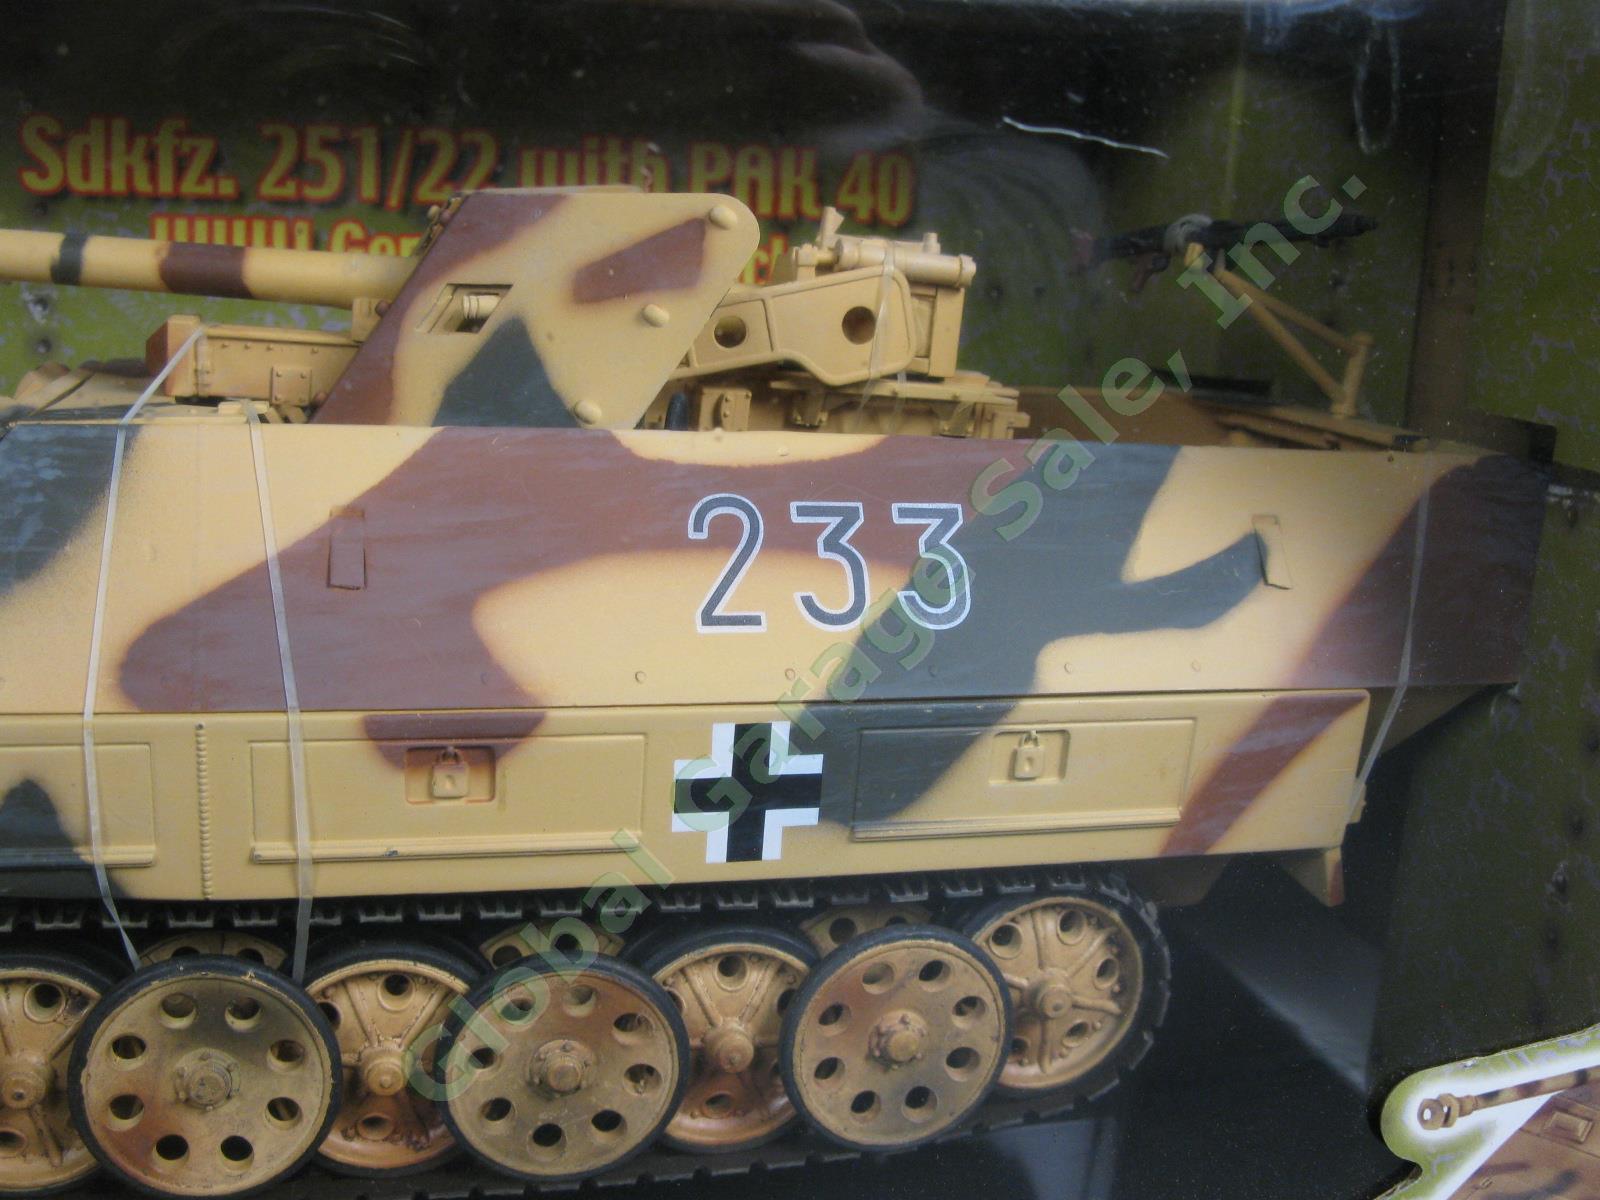 Ultimate Soldier 1/18 Sdkfz 251/22 PAK 40 WWII German Halftrack Tank 21st Toys 2